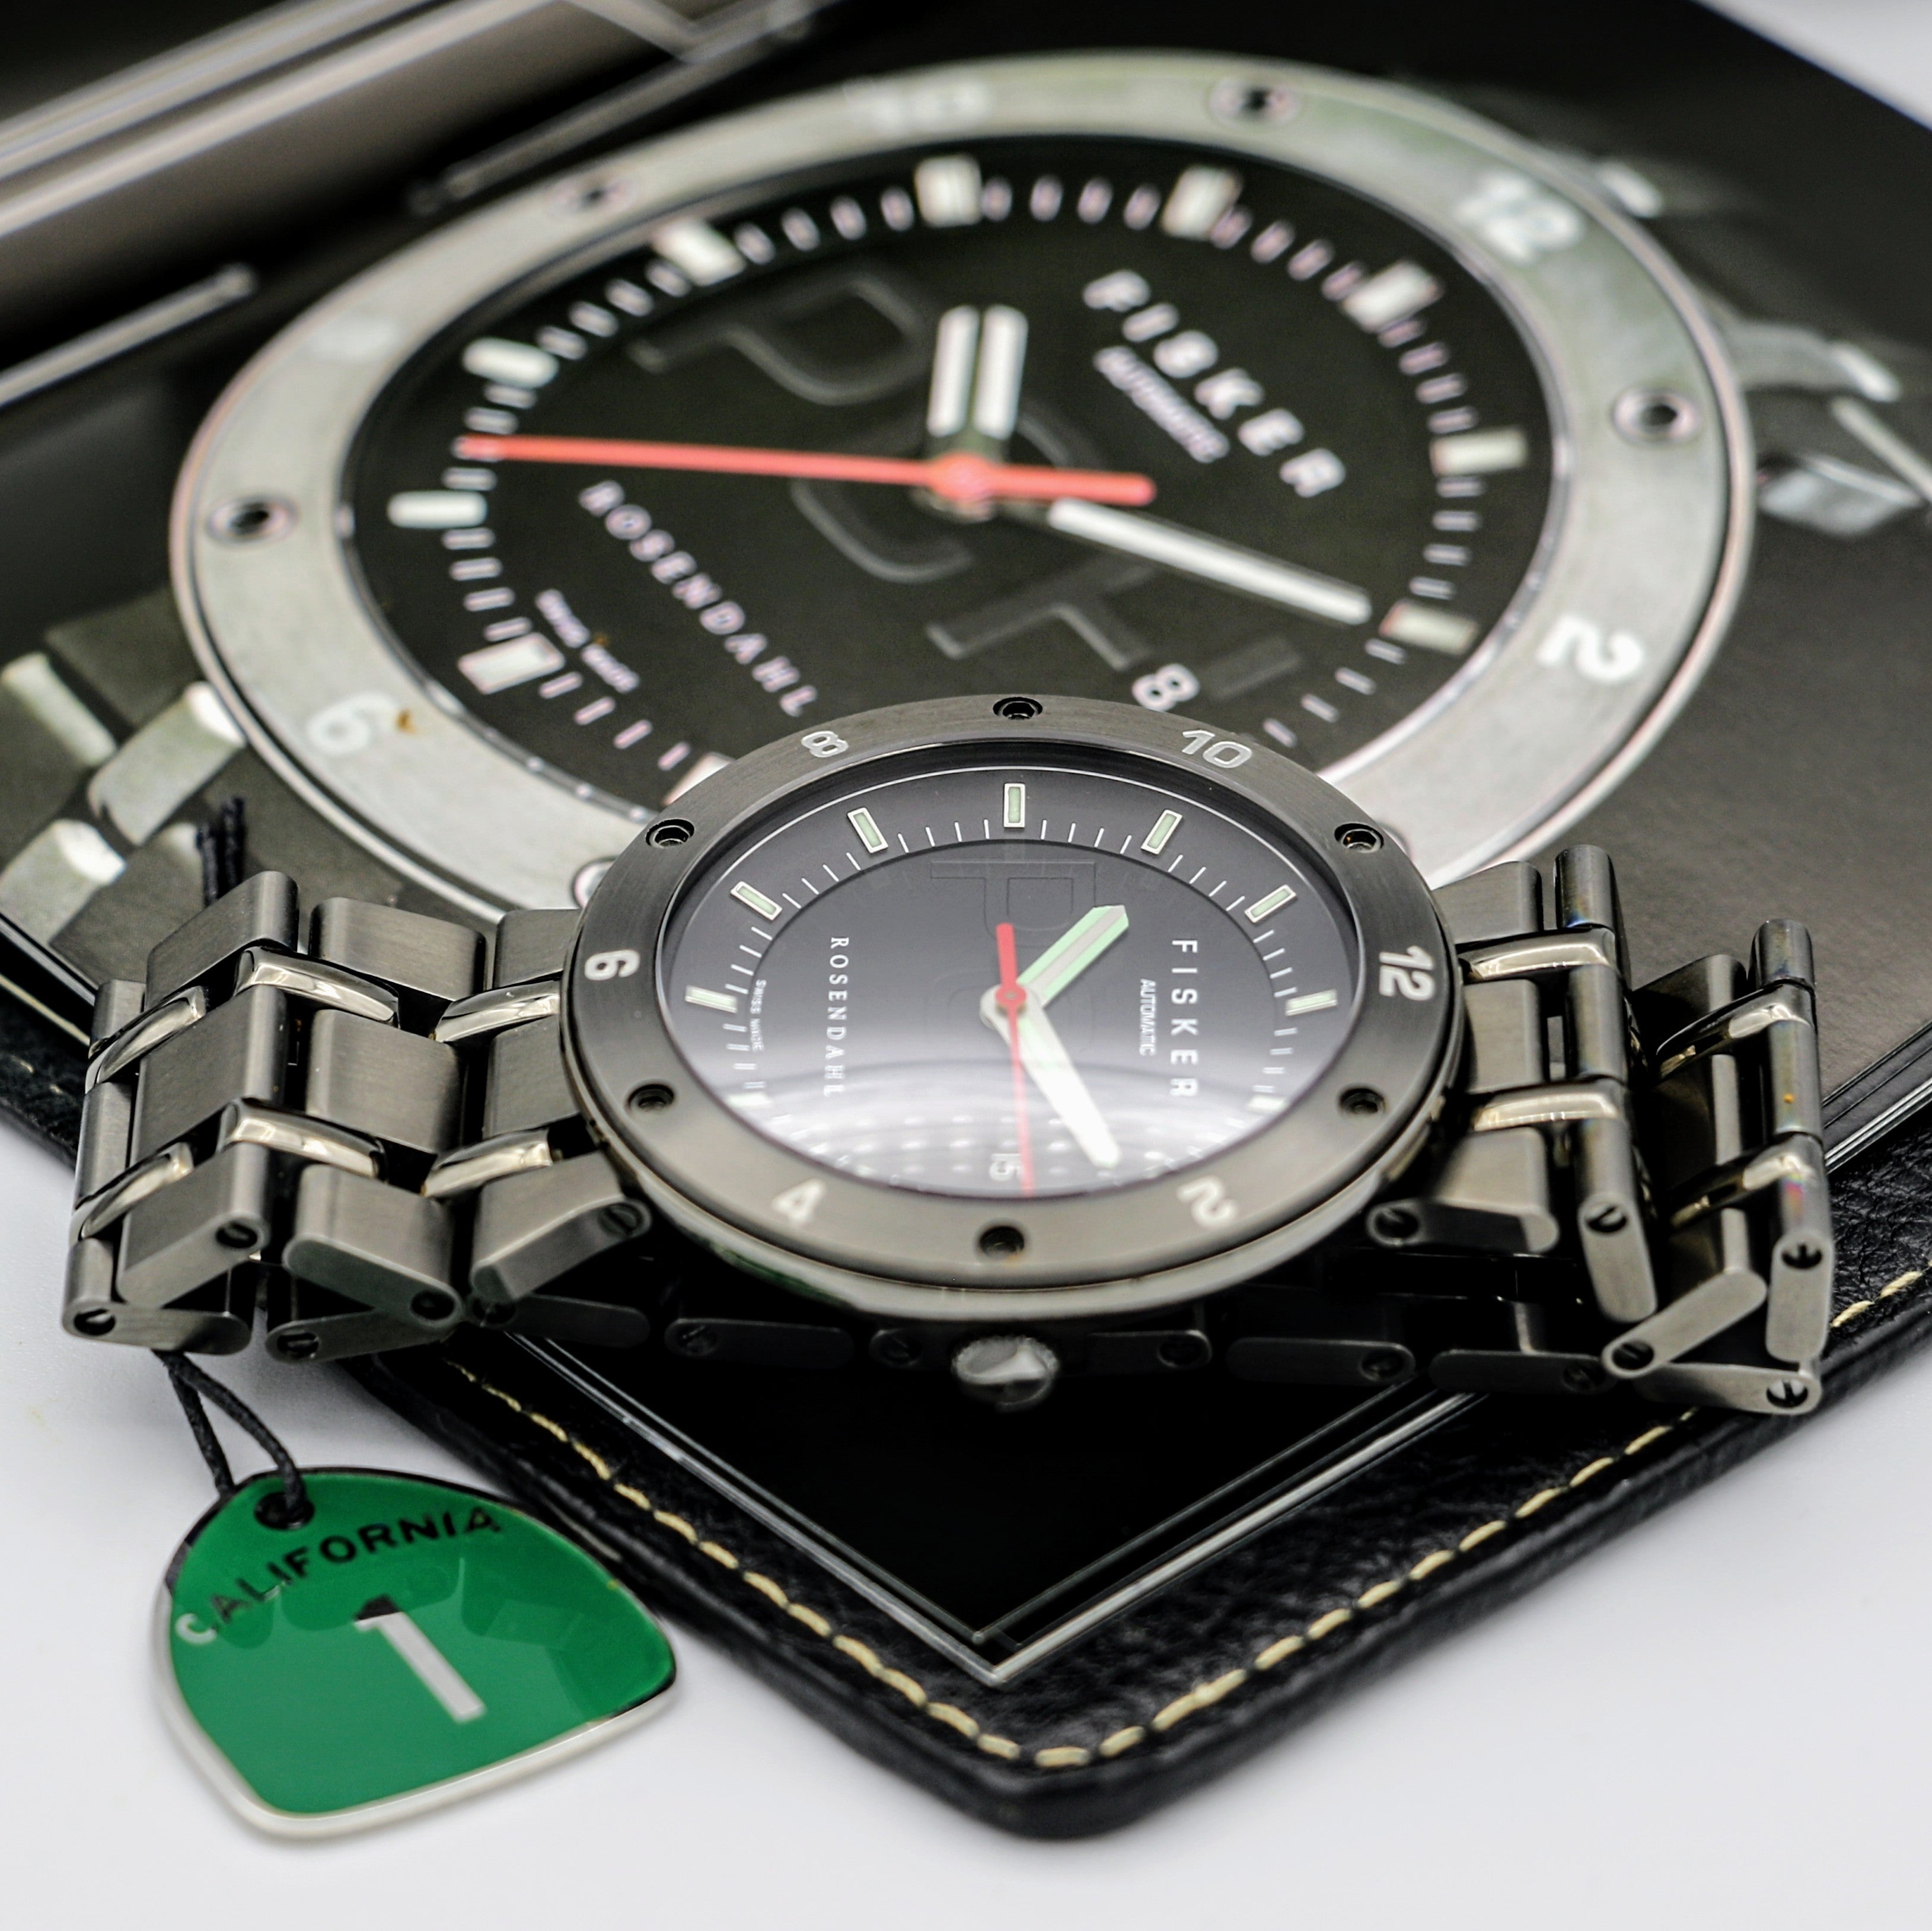 HENRIK FISKER PCH Wristwatch by Rosendahl Automatic Watch Box & Papers